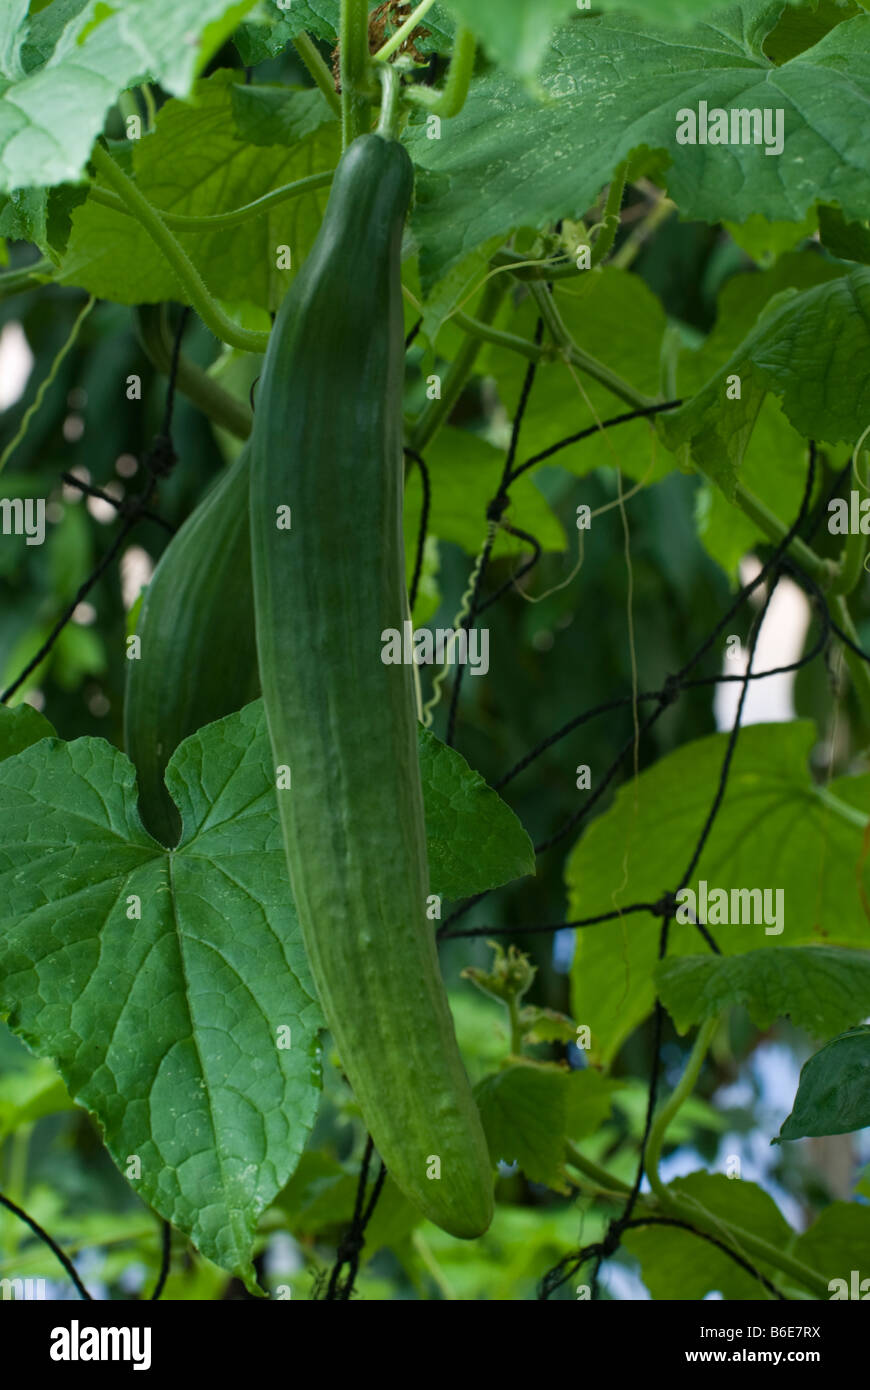 Cucumber plant Stock Photo